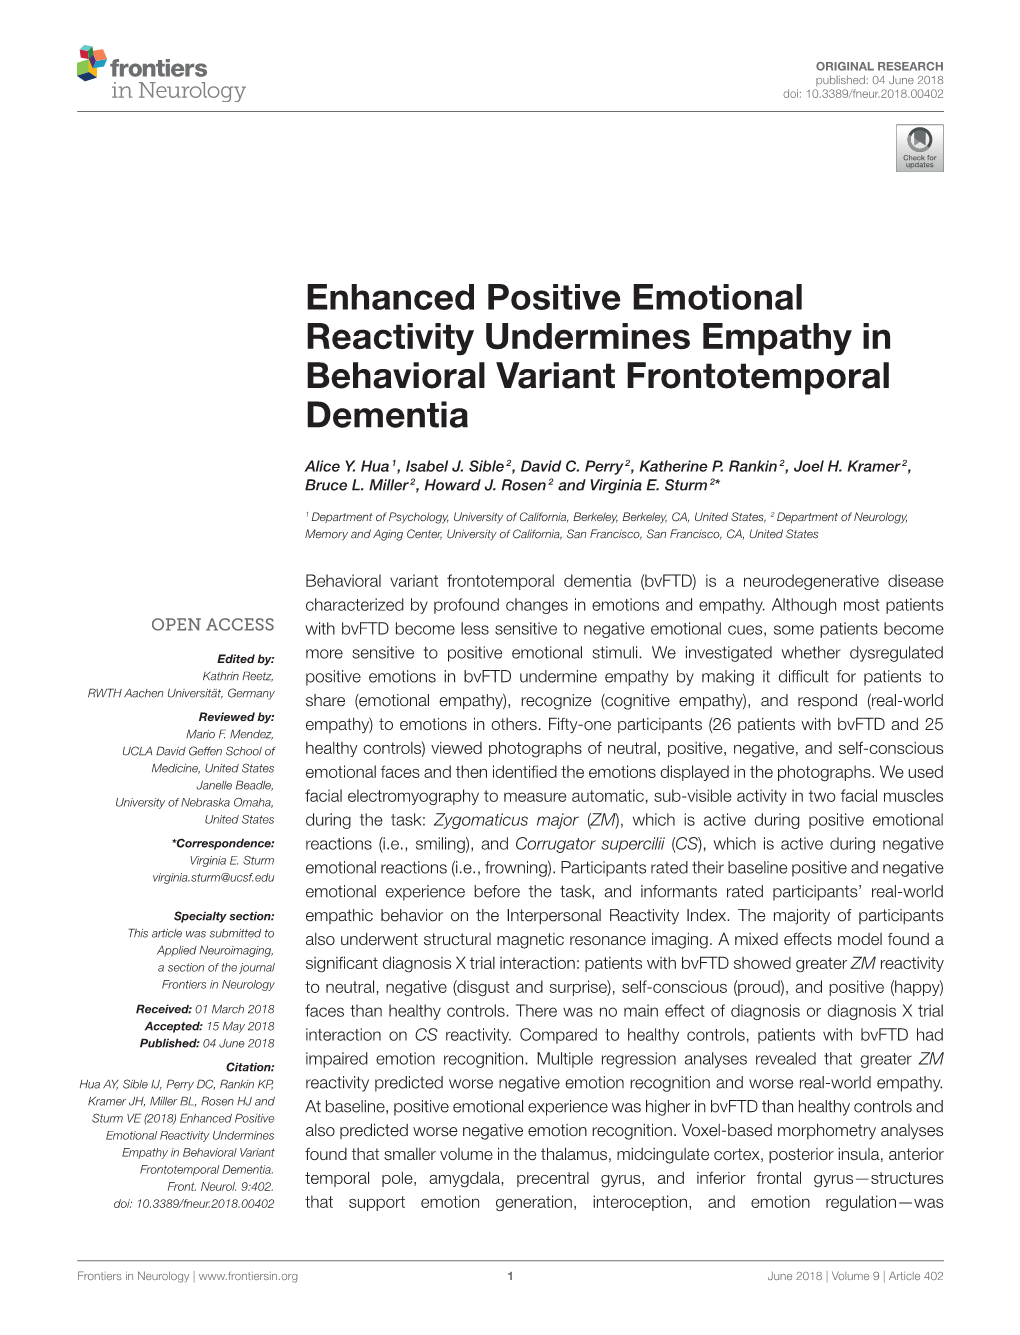 Enhanced Positive Emotional Reactivity Undermines Empathy in Behavioral Variant Frontotemporal Dementia